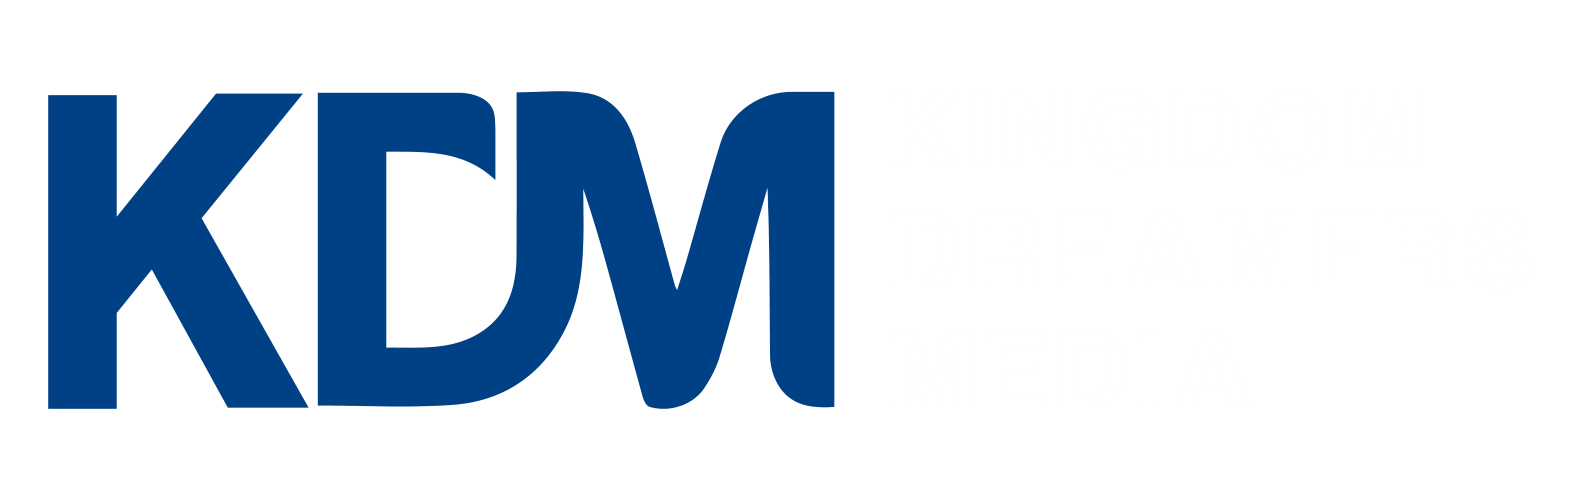 Kingdom Dreamers Media